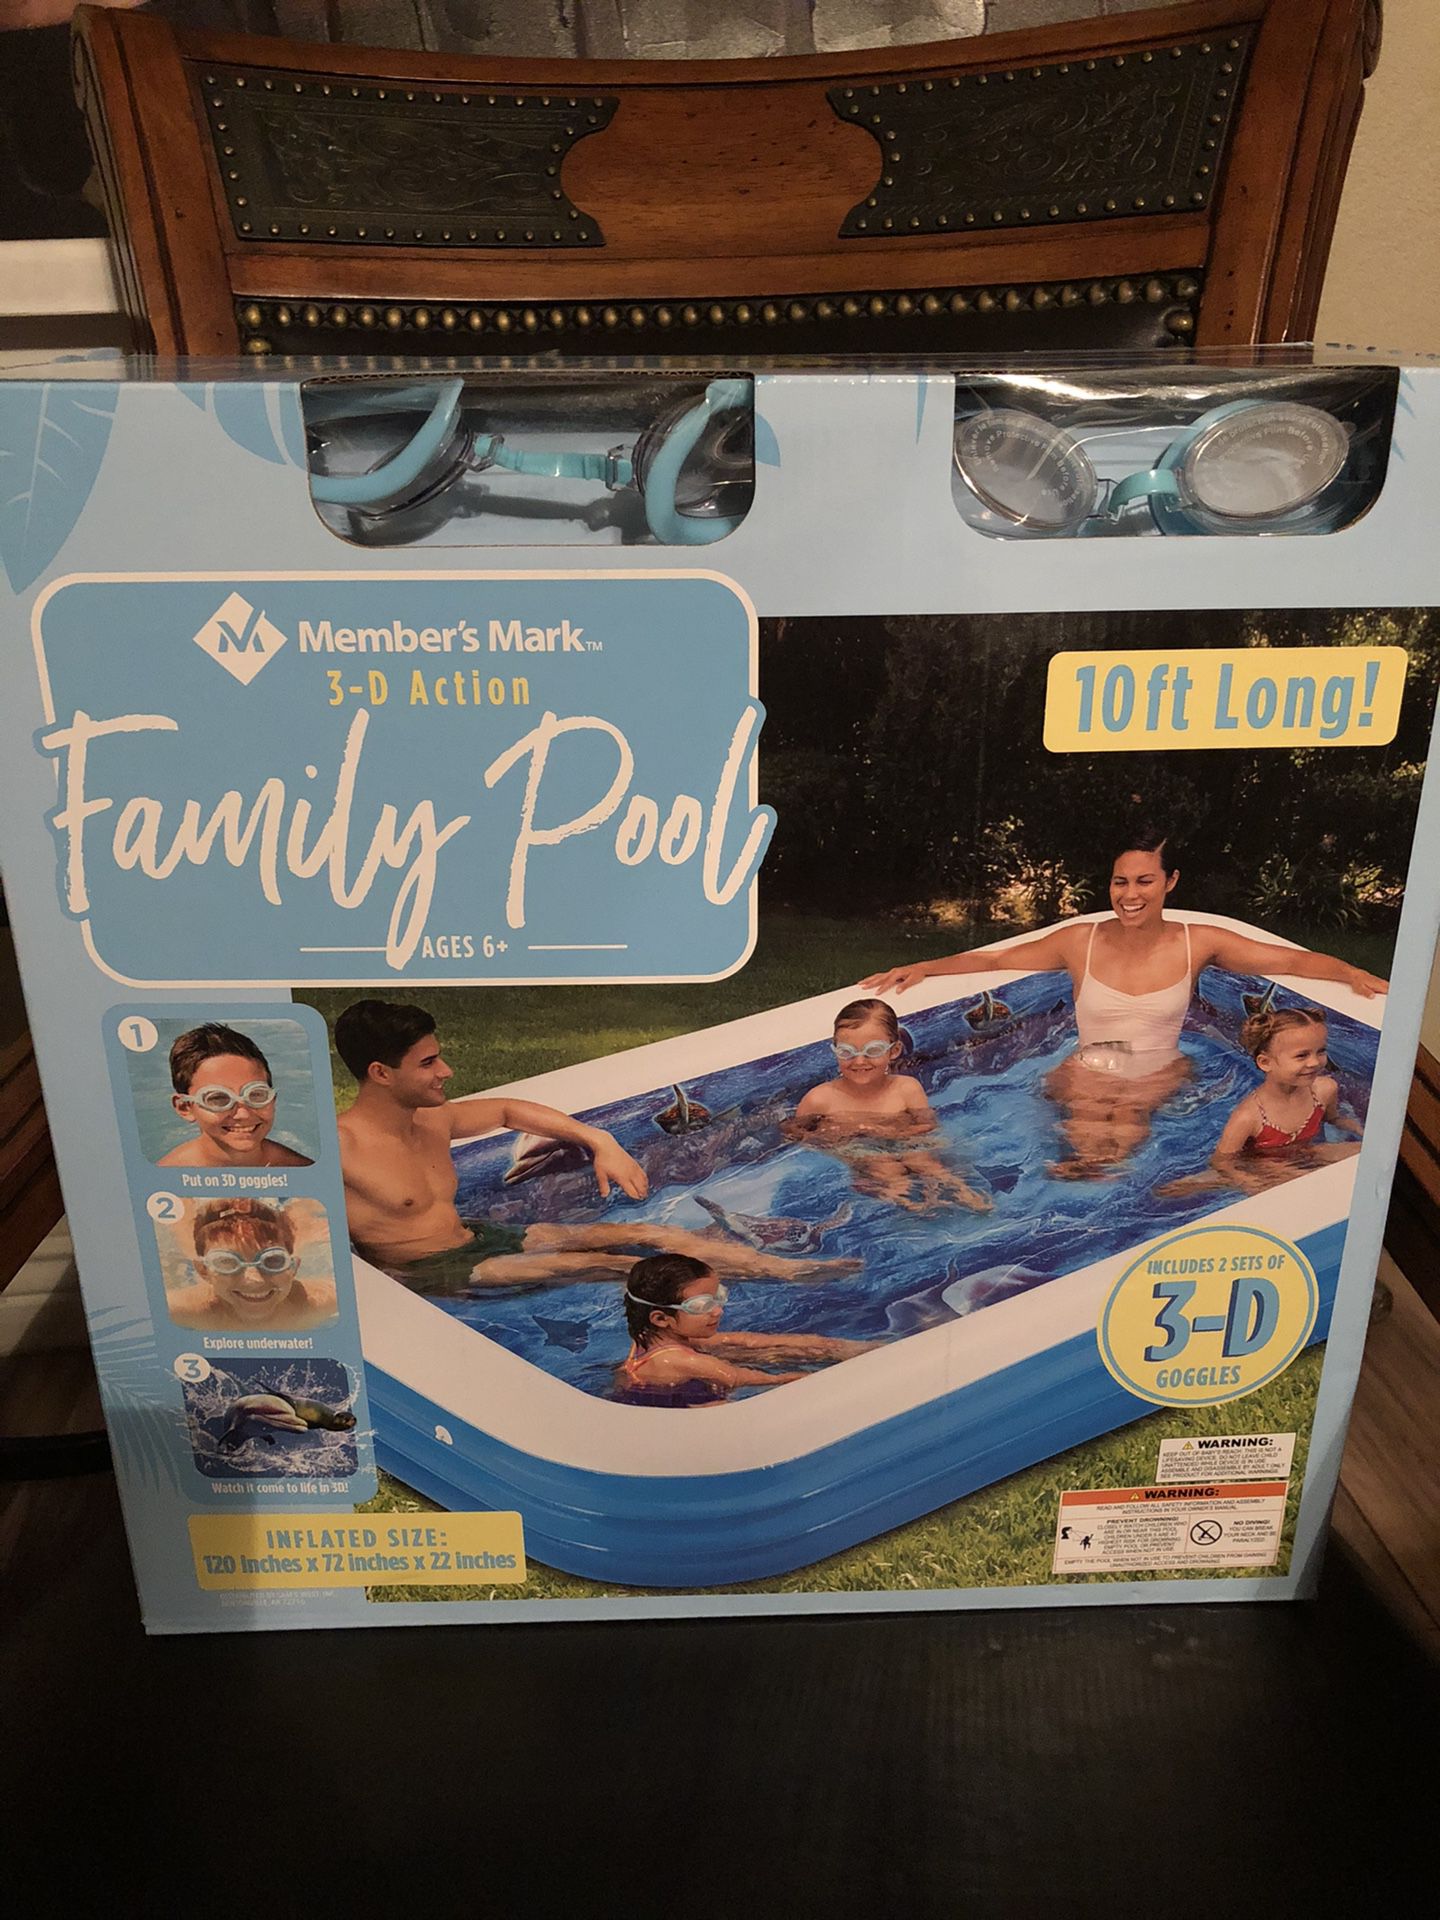 Family pool